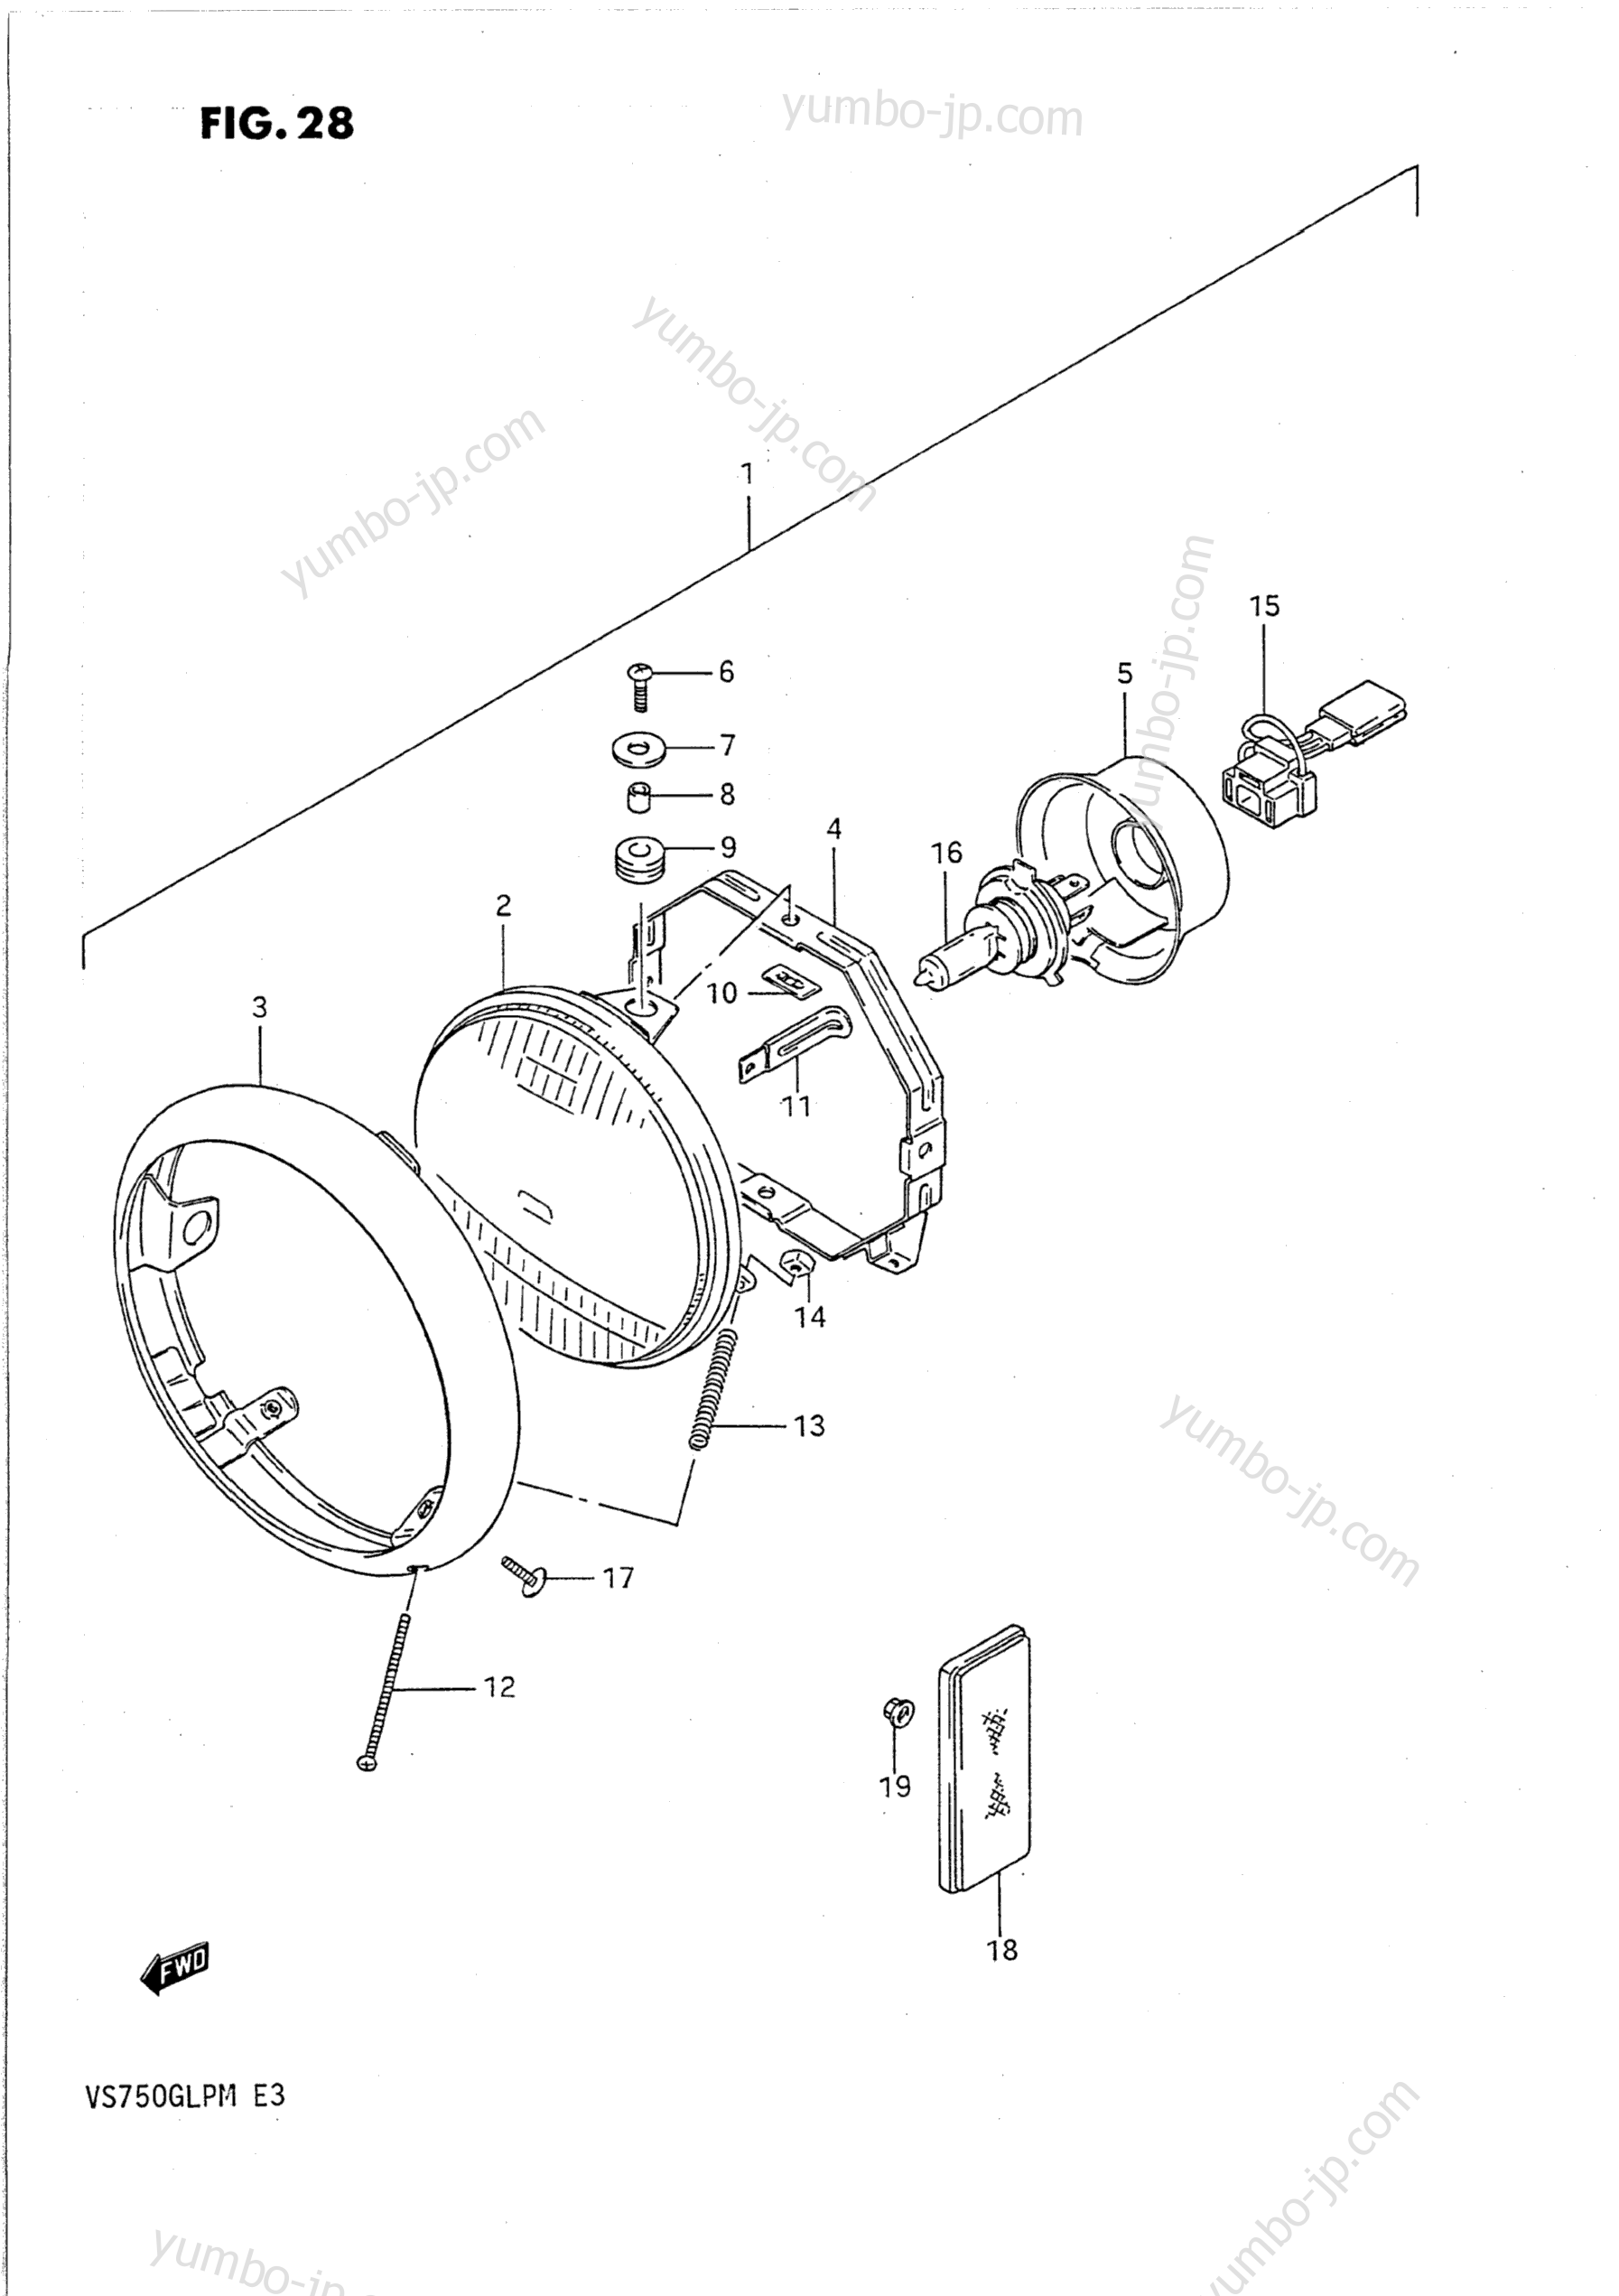 HEADLAMP for motorcycles SUZUKI Intruder (VS750GLP) 1991 year